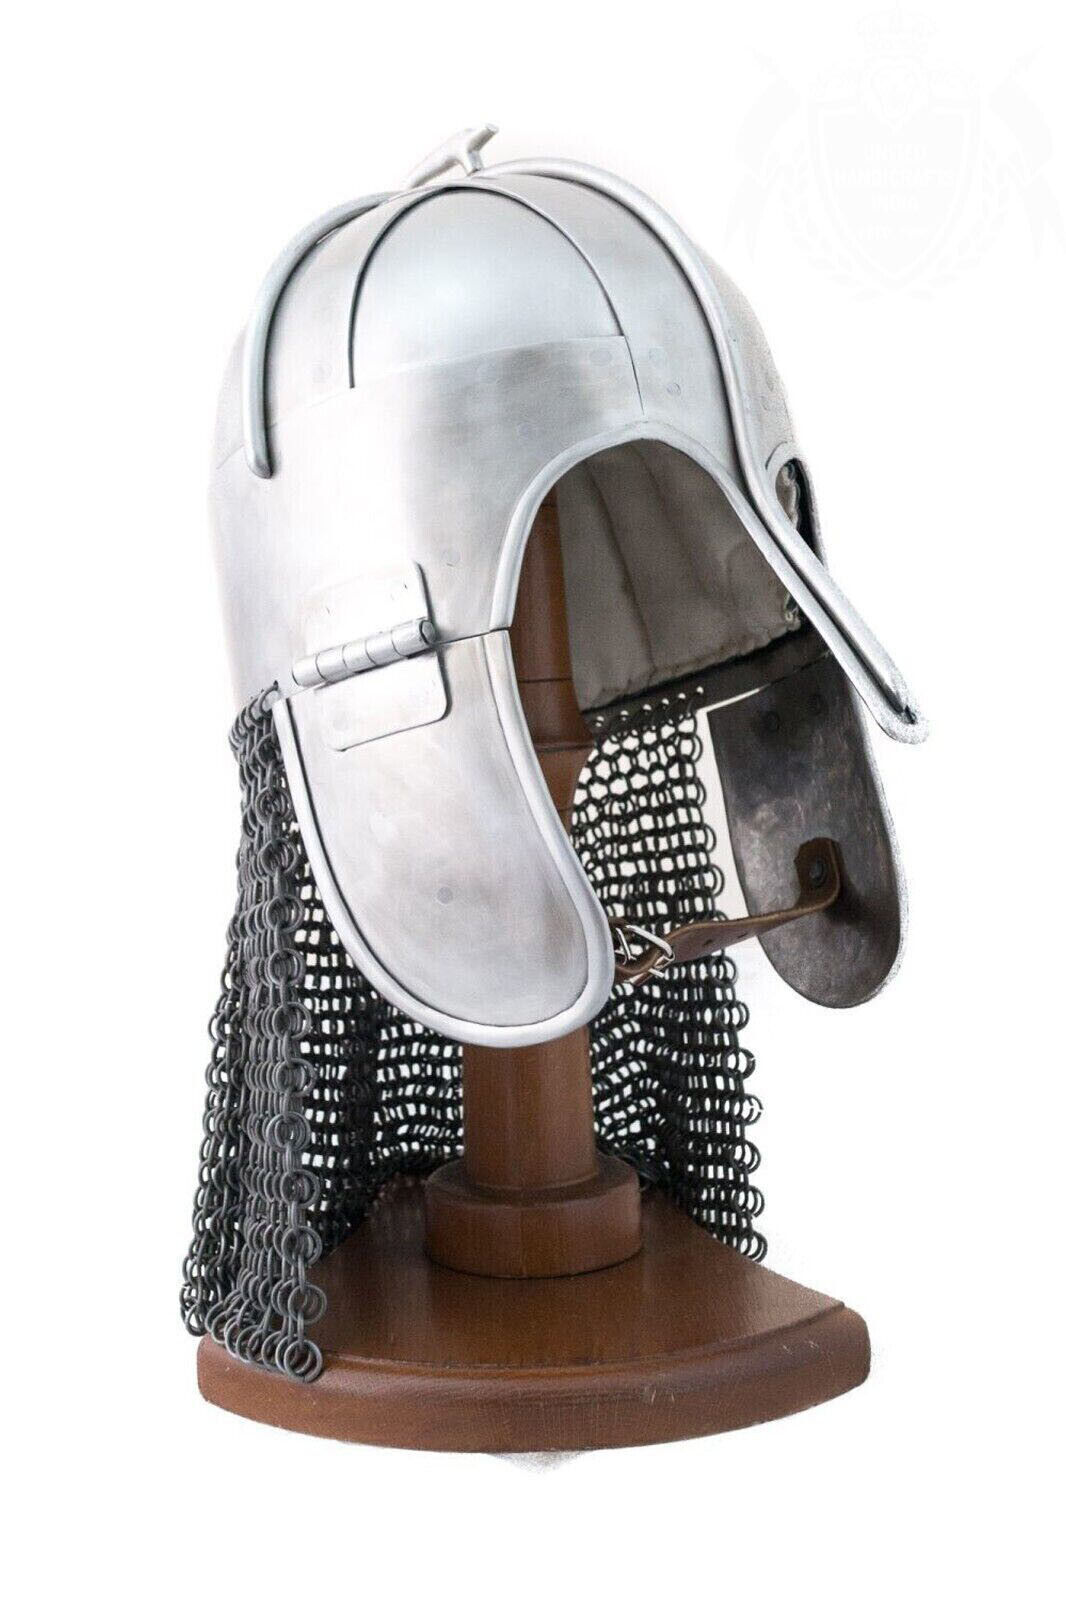 Halloween Early Medieval Anglo saxon Helmet 7th century Larp reenactment helmet